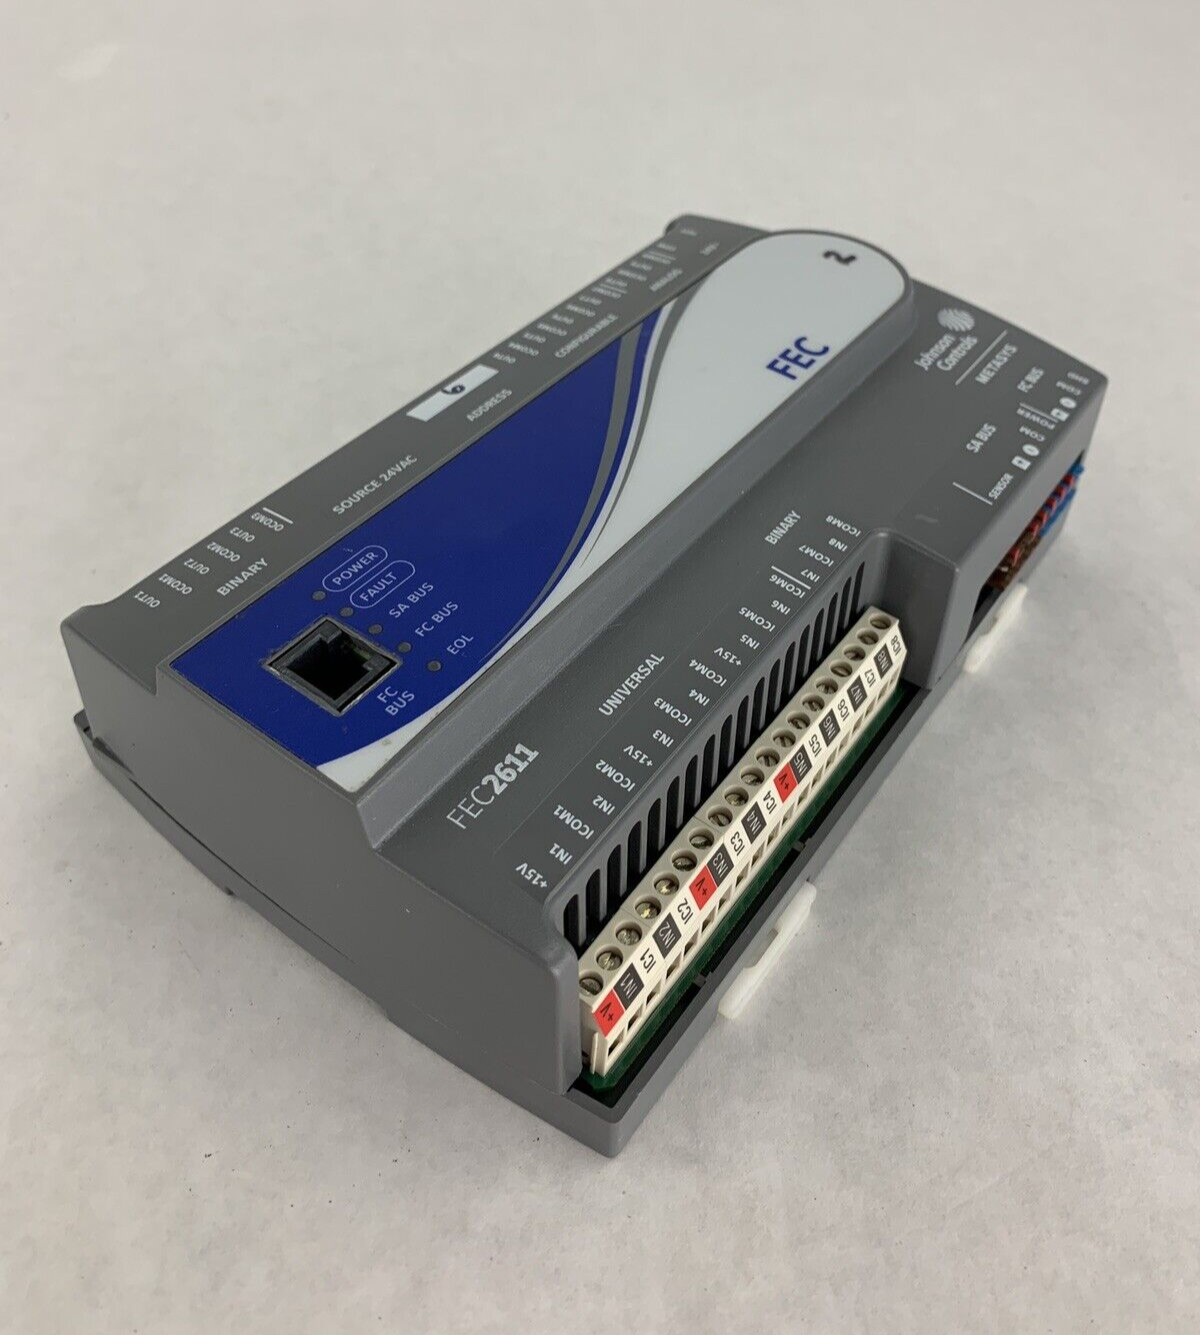 Johnson Controls METASYS MS-FEC2611-0 Controller Power Tested